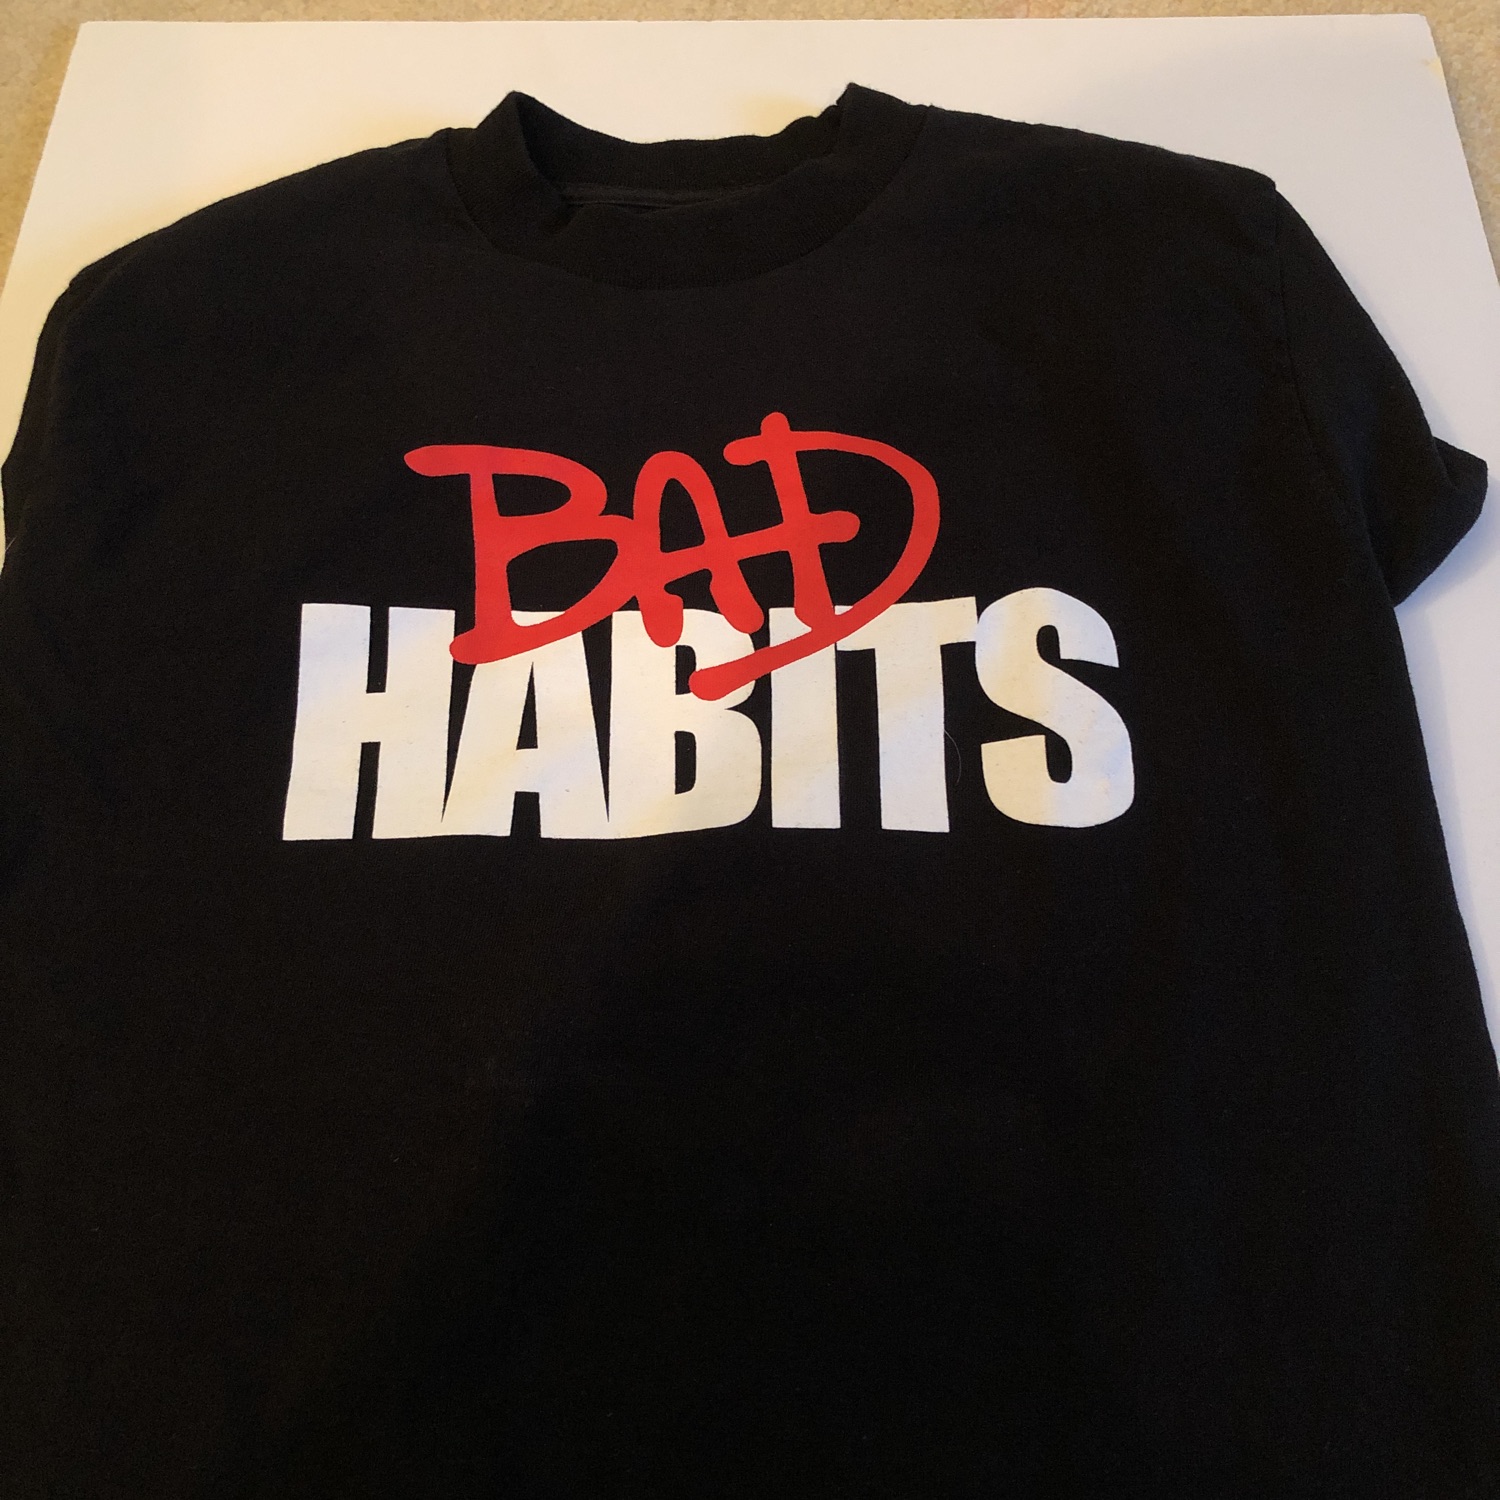 nav bad habits review